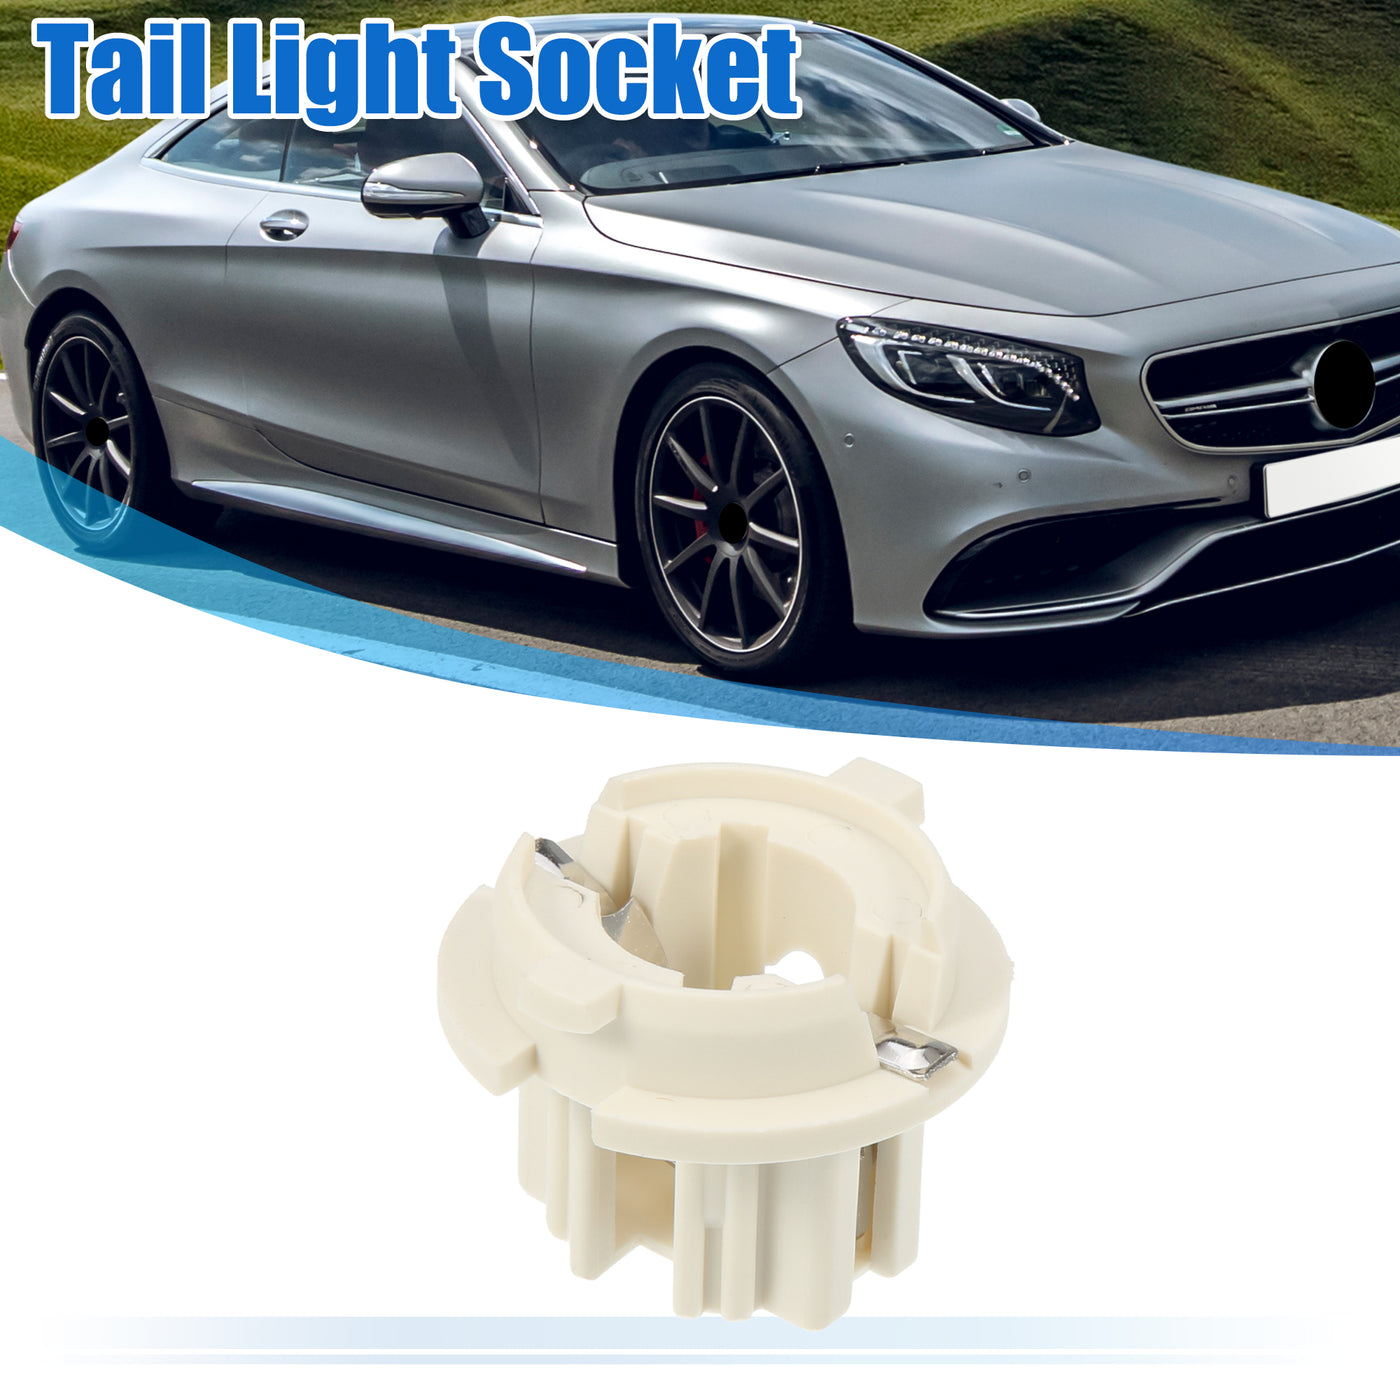 X AUTOHAUX 1408260582 Tail Light Socket Back Up Fog Light Side Marker Lamp Socket for Mercedes-Benz S430 S500 S55 AMG